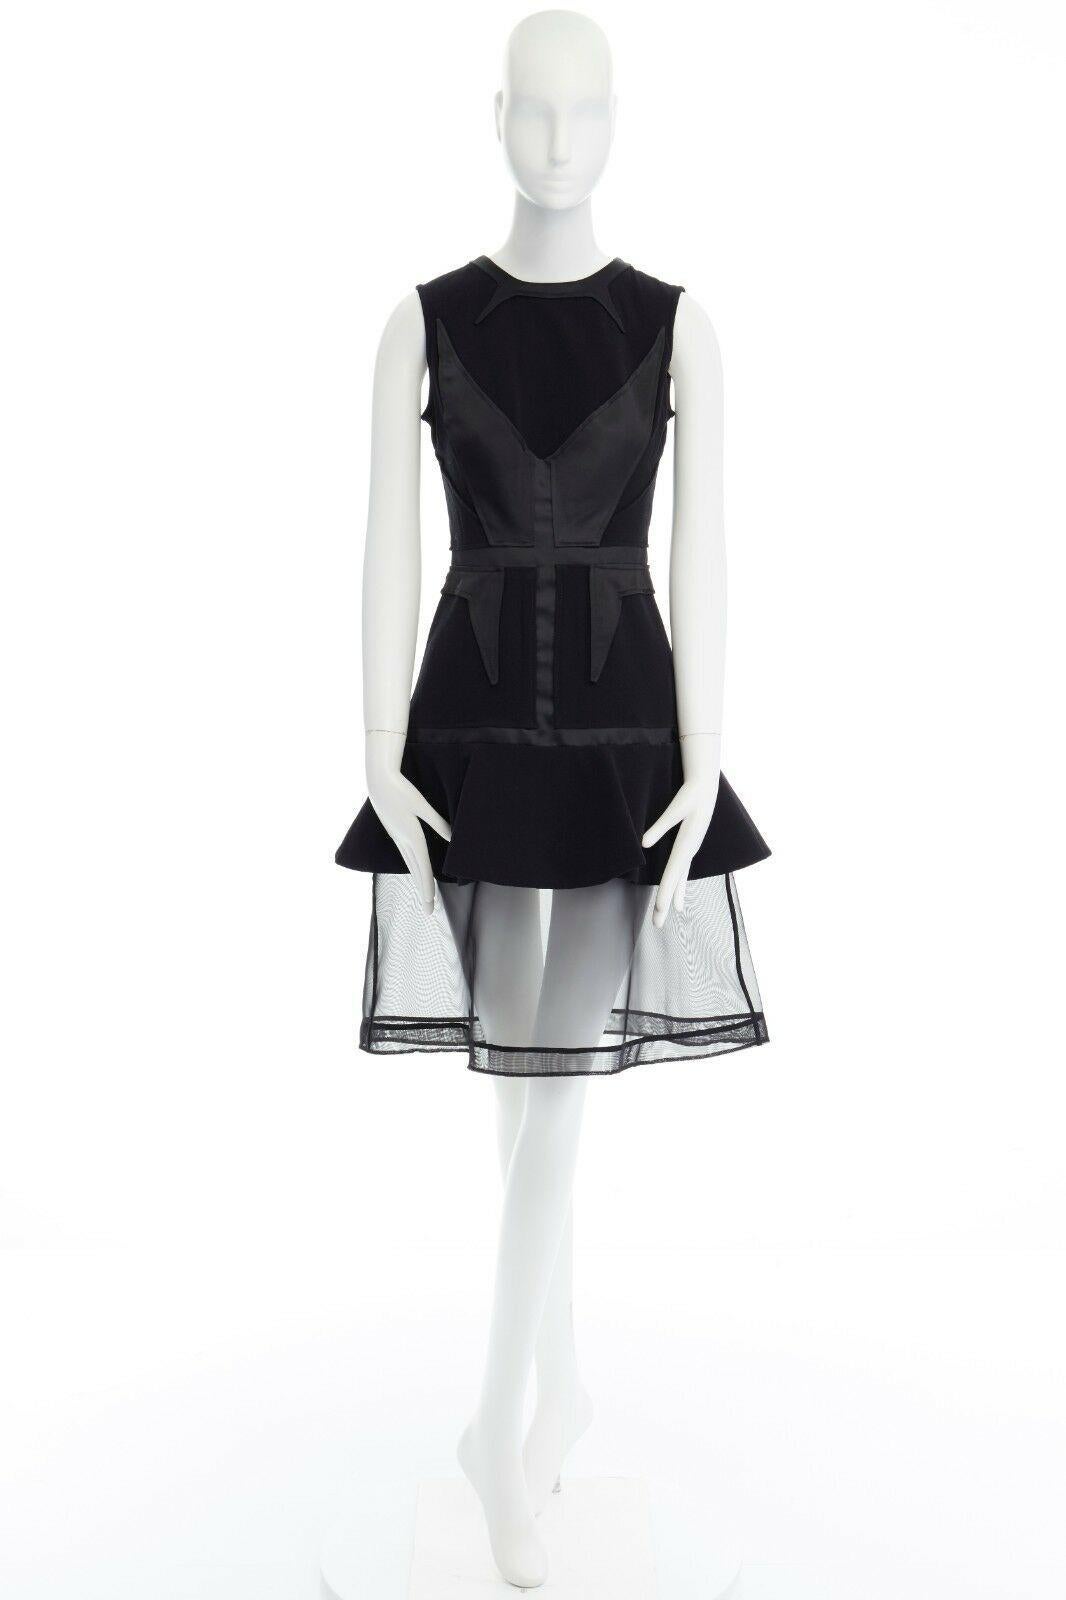 Black GIVENCHY TISCI 2011 black angular patched sheer skirt layer dress FR38 M